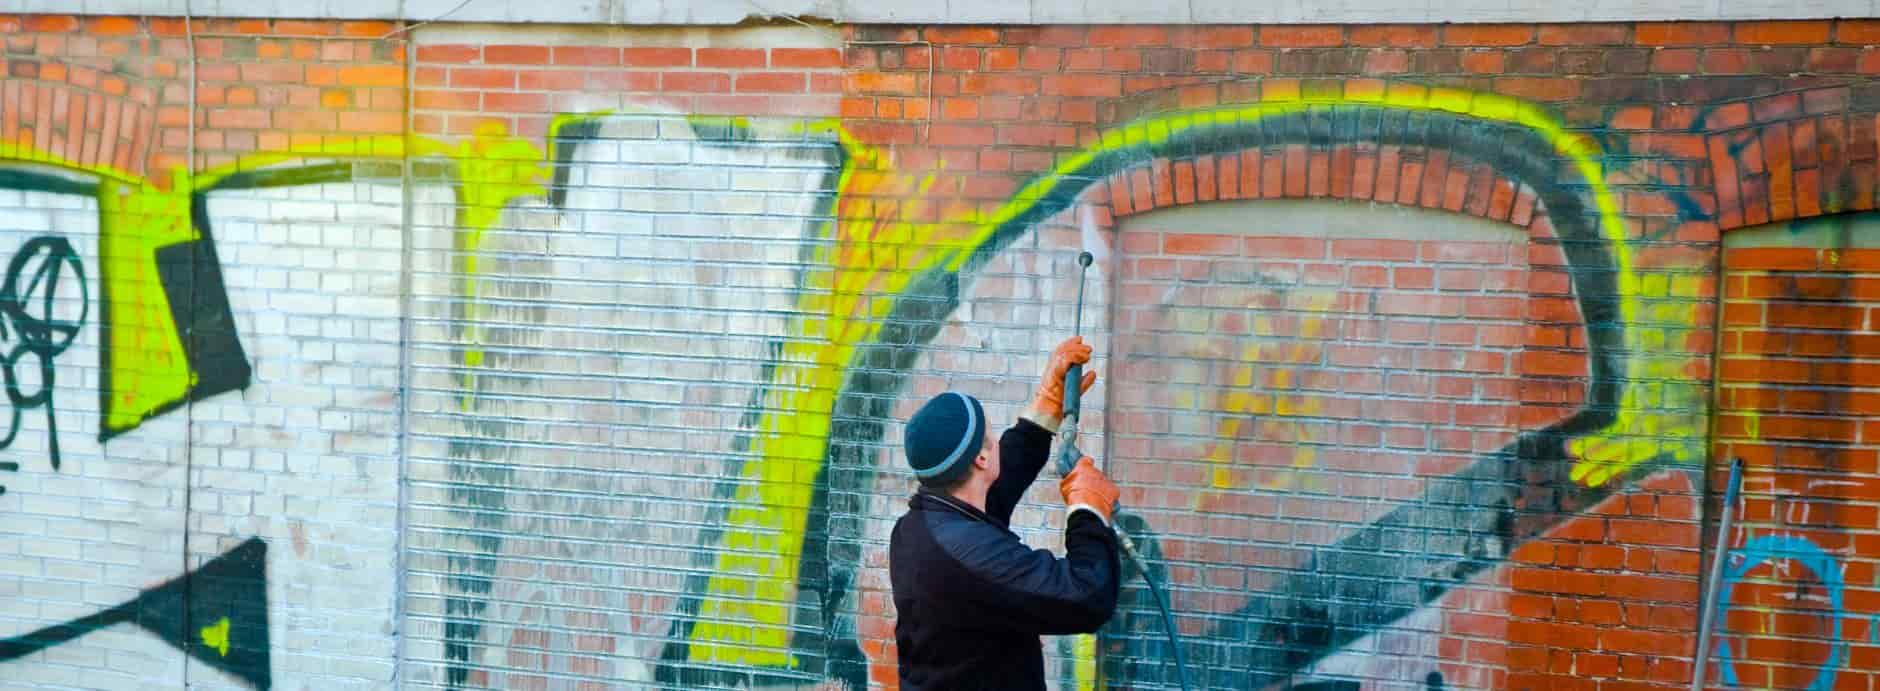 Graffiti Removal in Washington